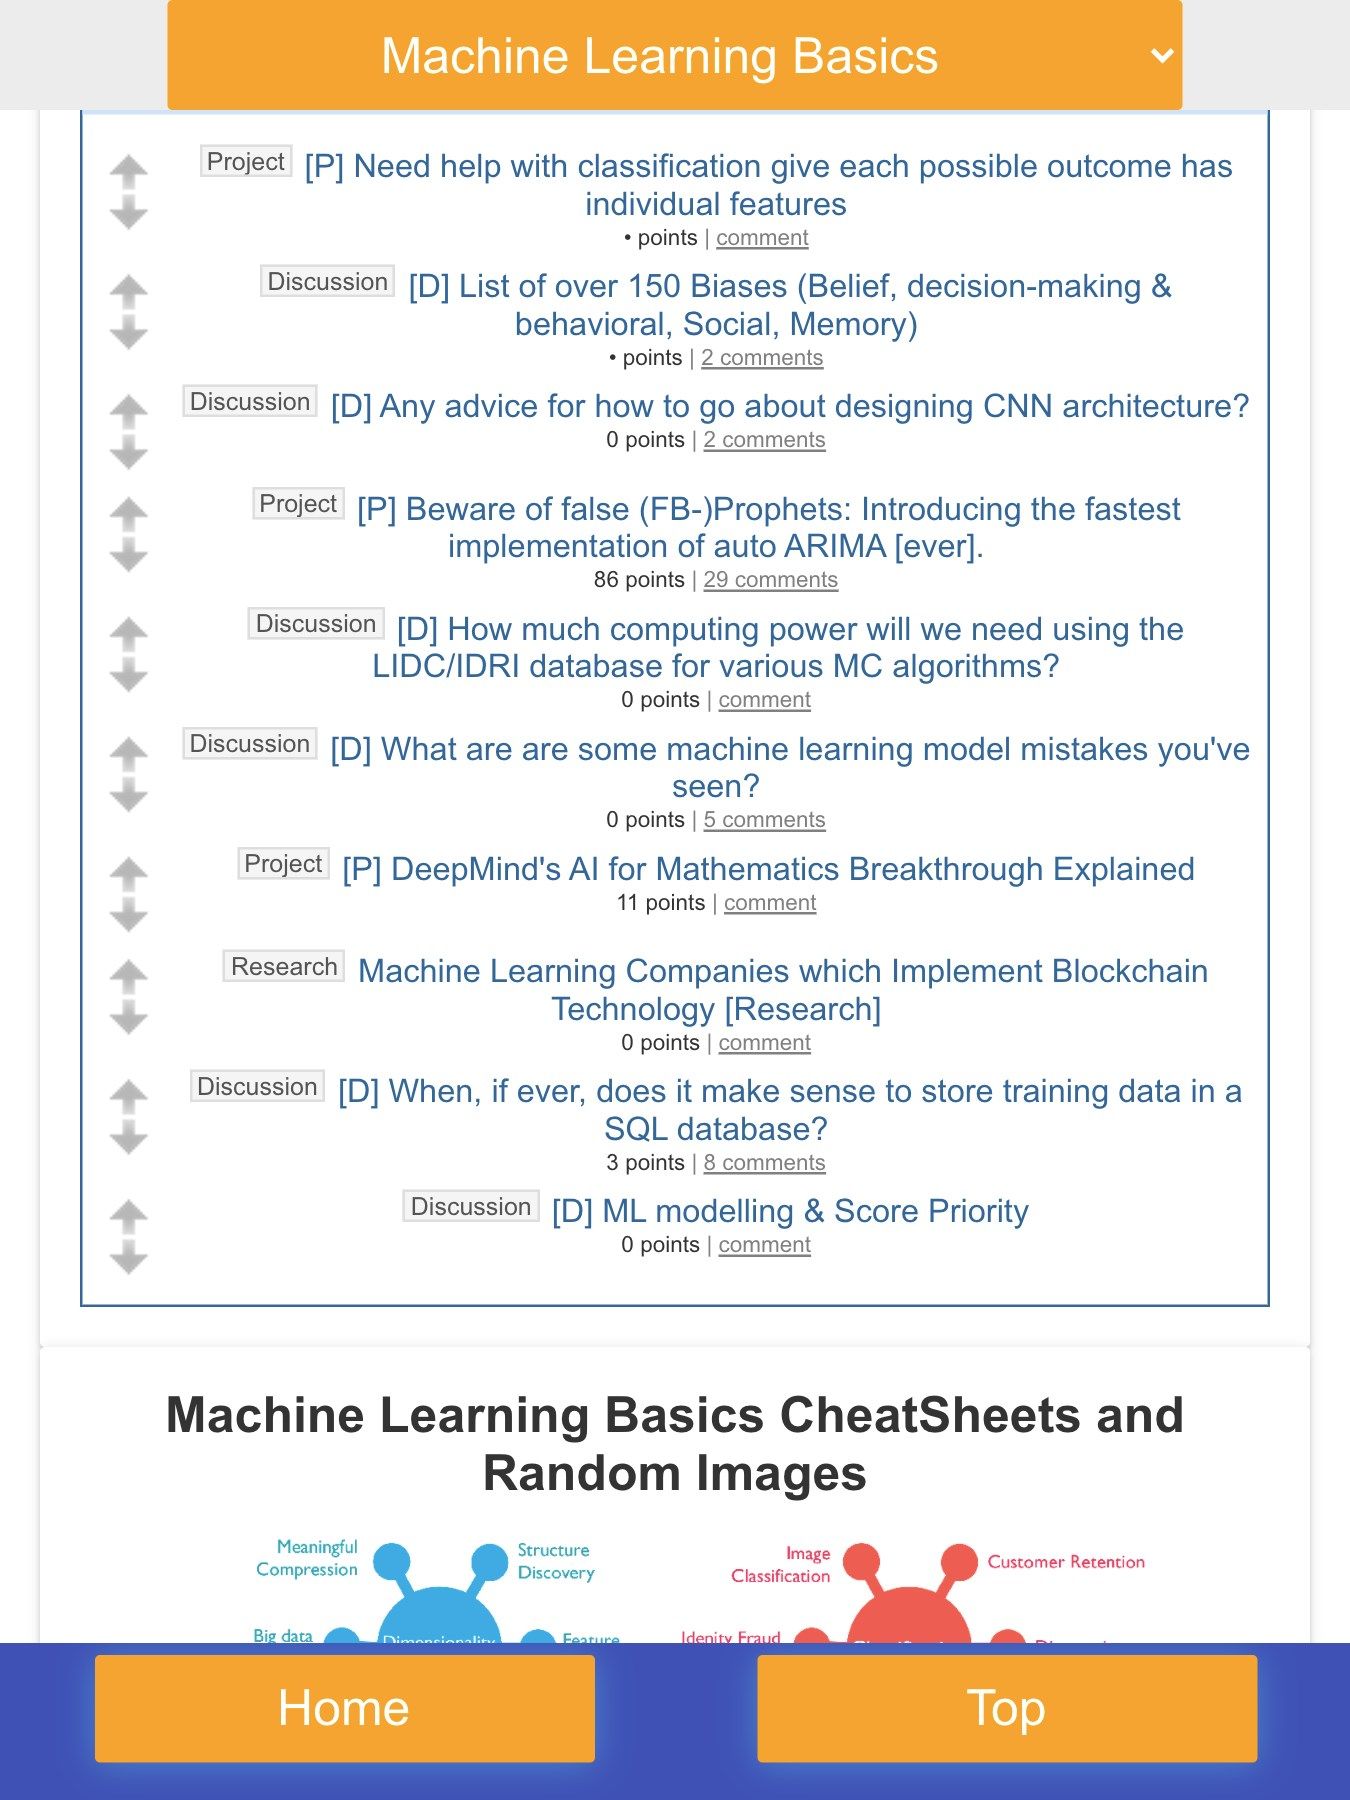 GCP Professional Machine Learning Engineer Certification Exam Prep